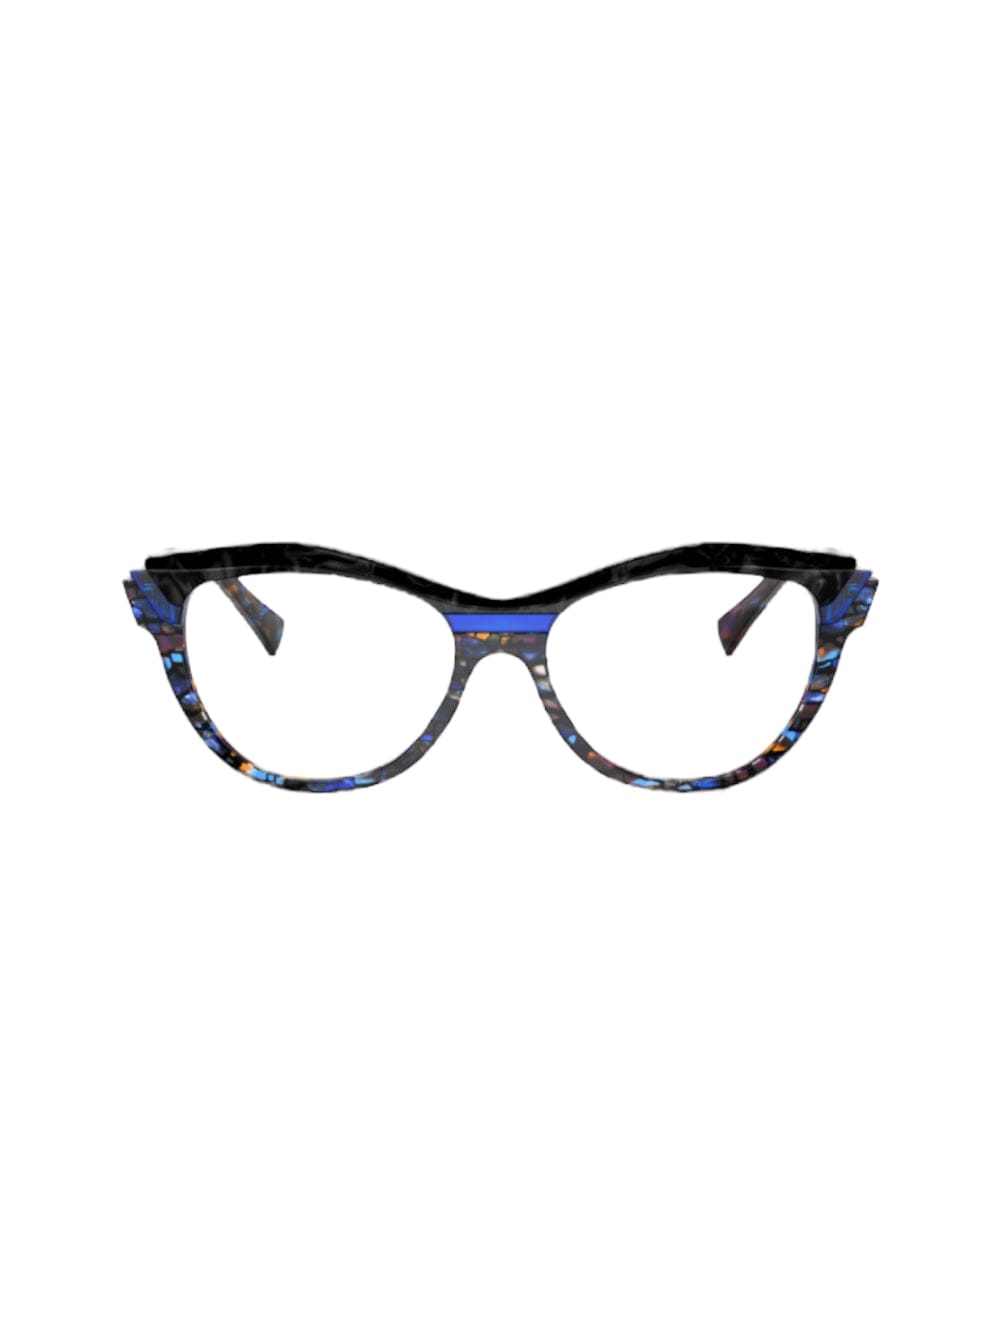 Alain Mikli Sarlot - 3128 - Blue/brown Glasses